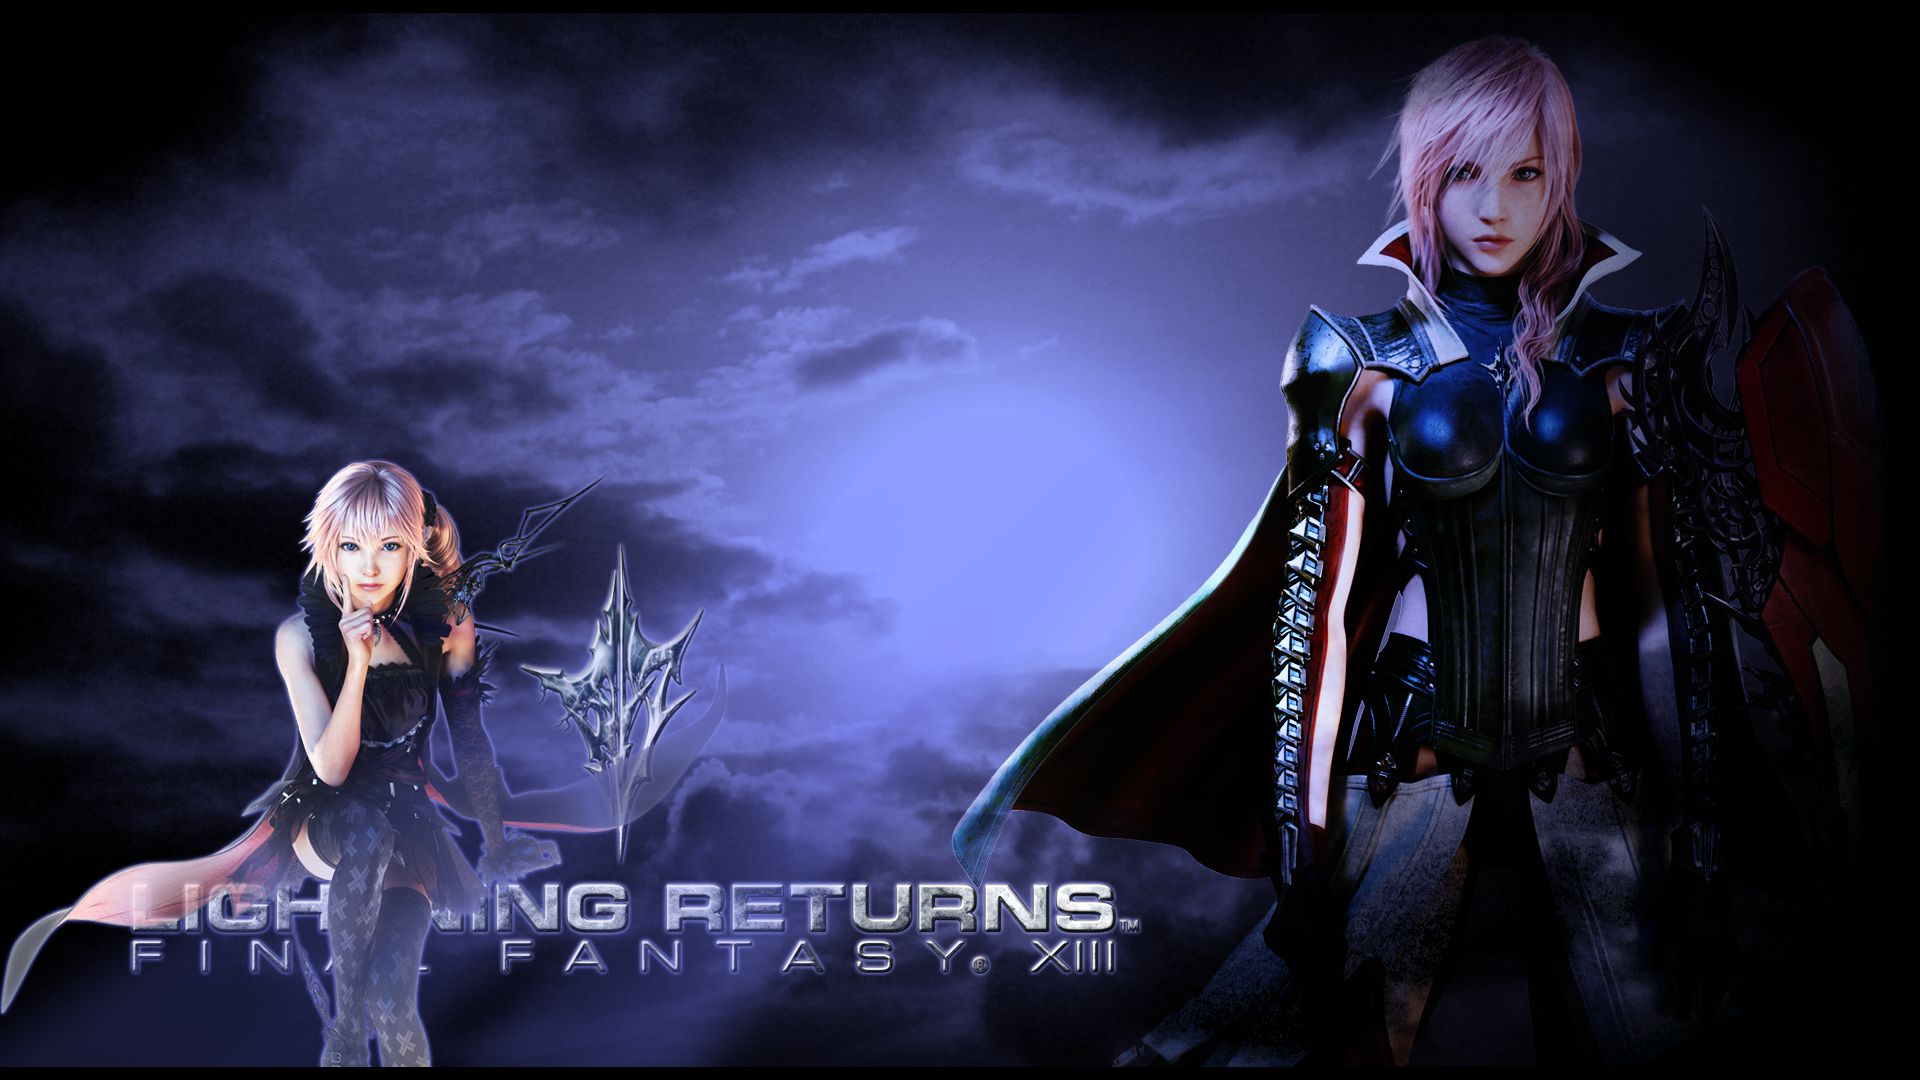 Lightning Returns Final Fantasy Xiii Wallpaper By Thegr8tani On